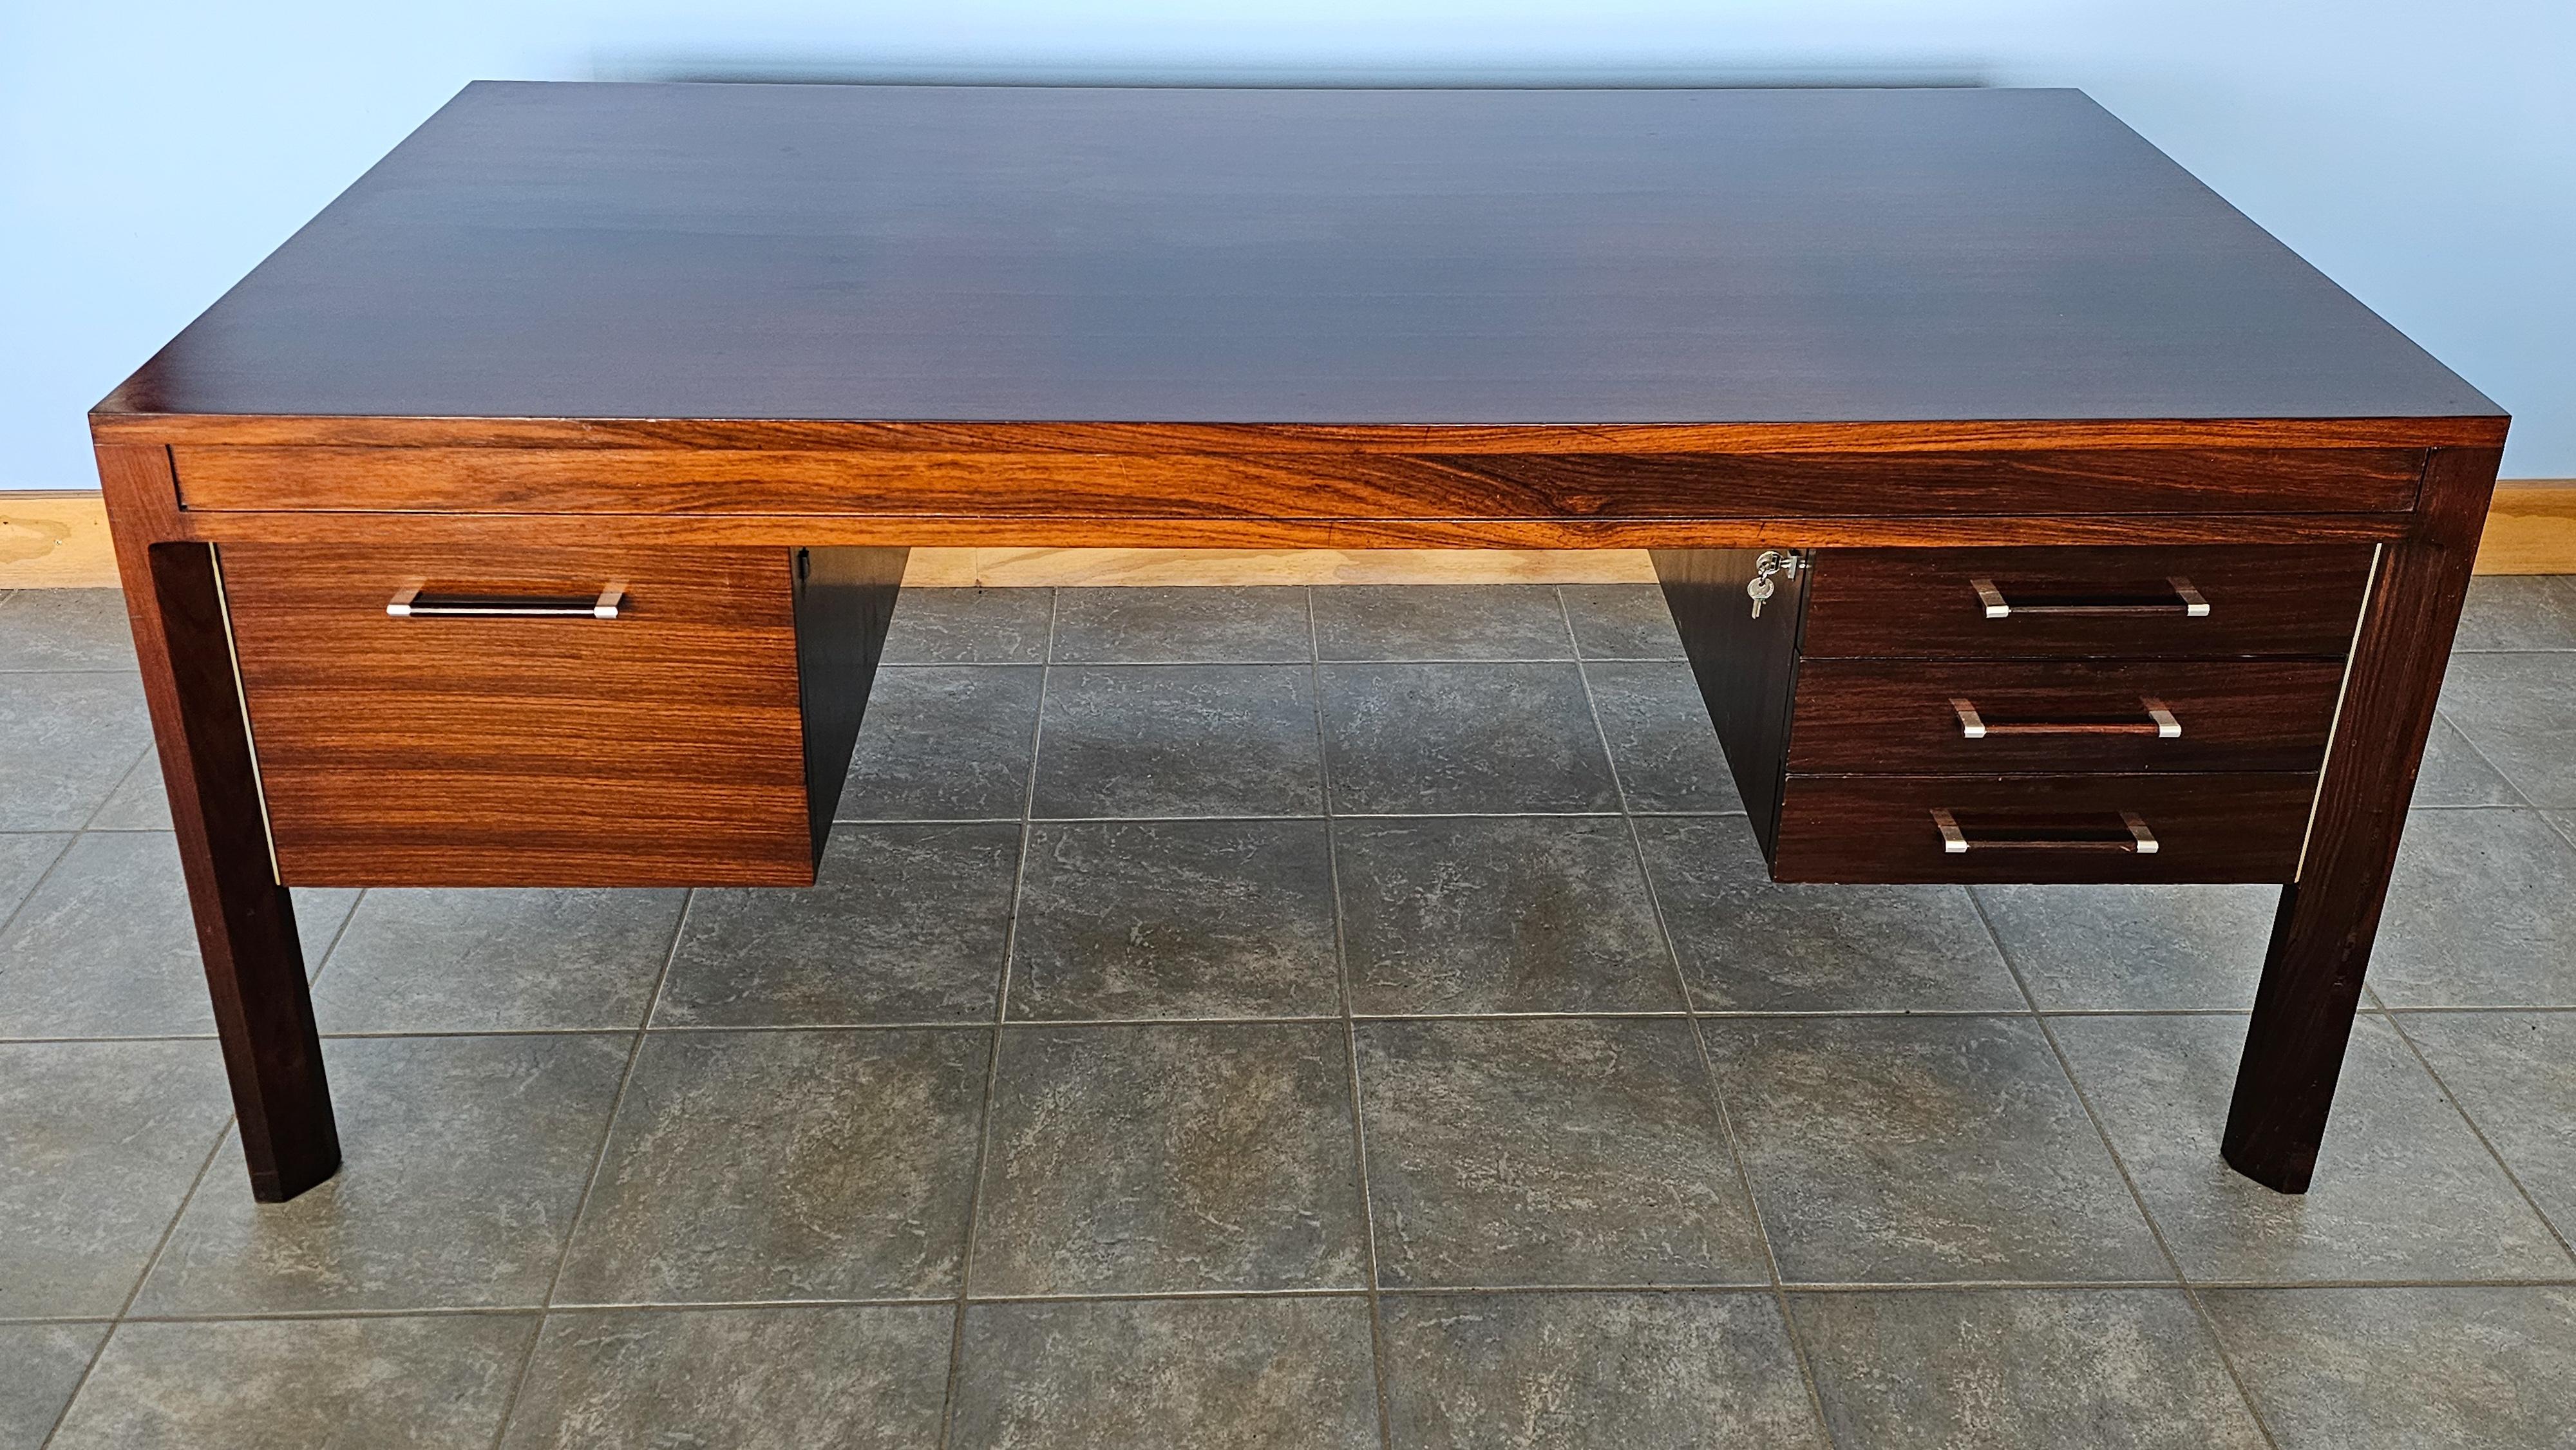 Anonima Castelli Palisander Wood Desk with Elegant Metal Insert Handle, 1970s For Sale 1